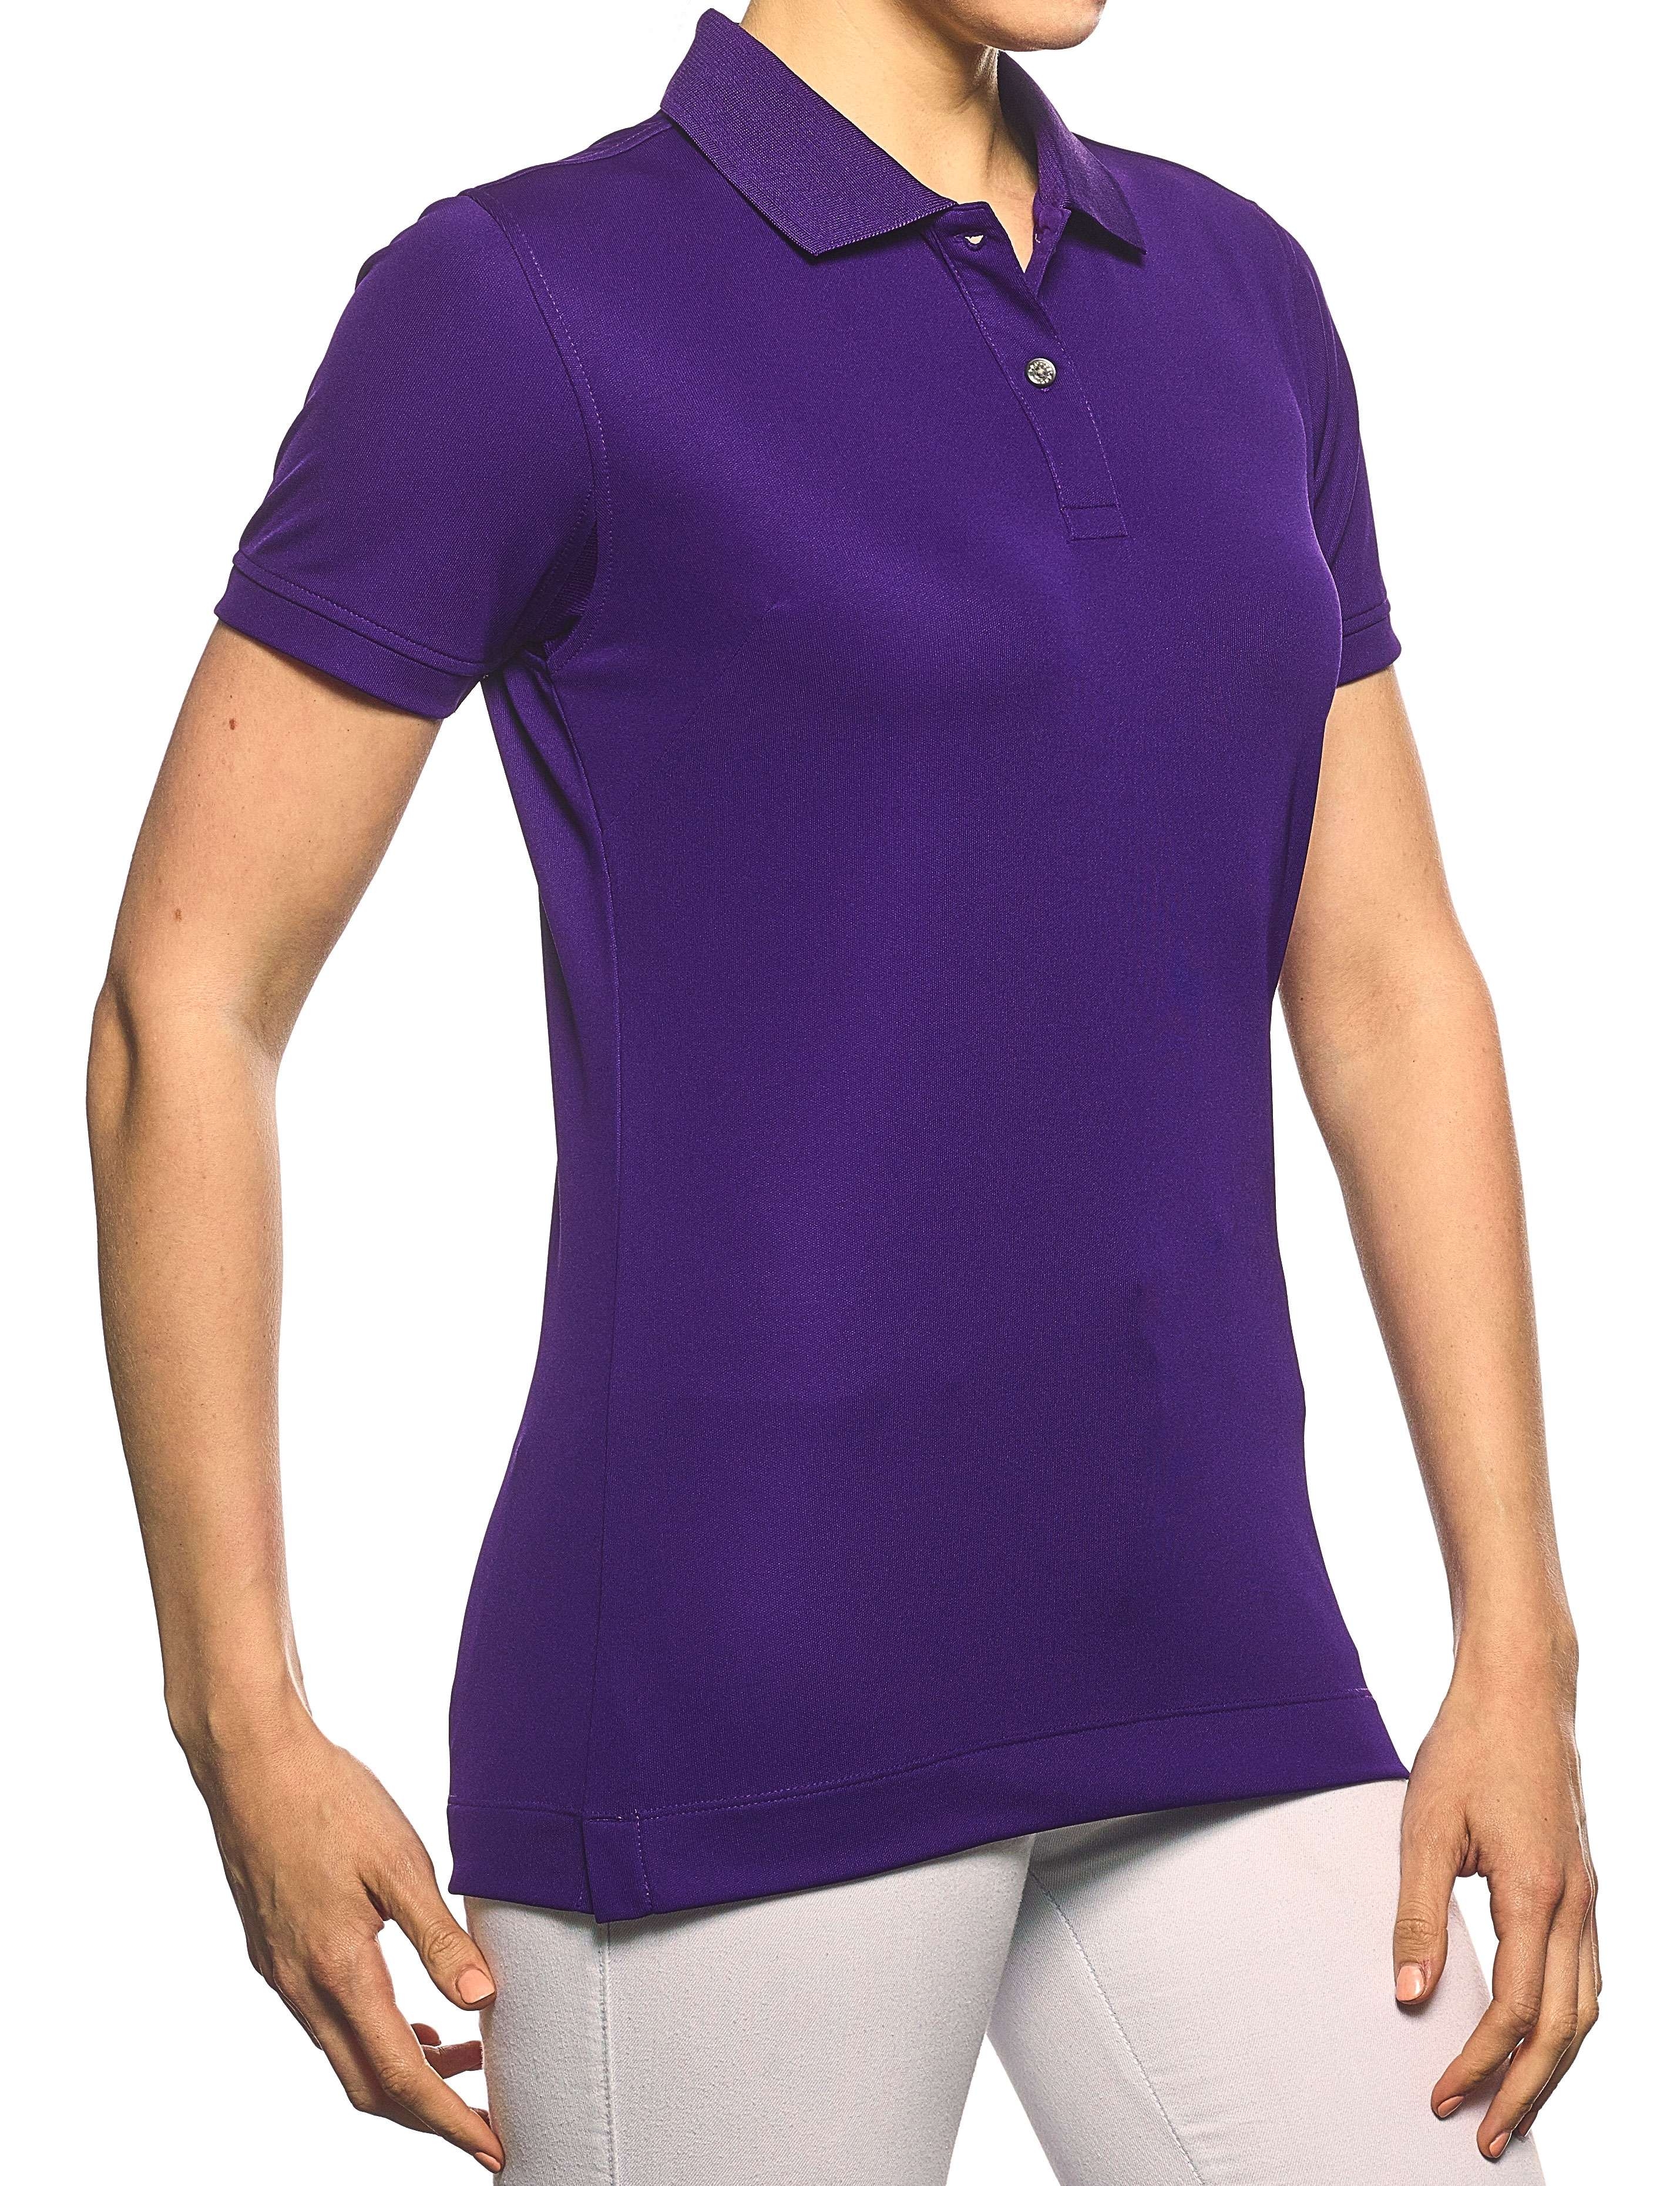 Champion polo shirts - Female